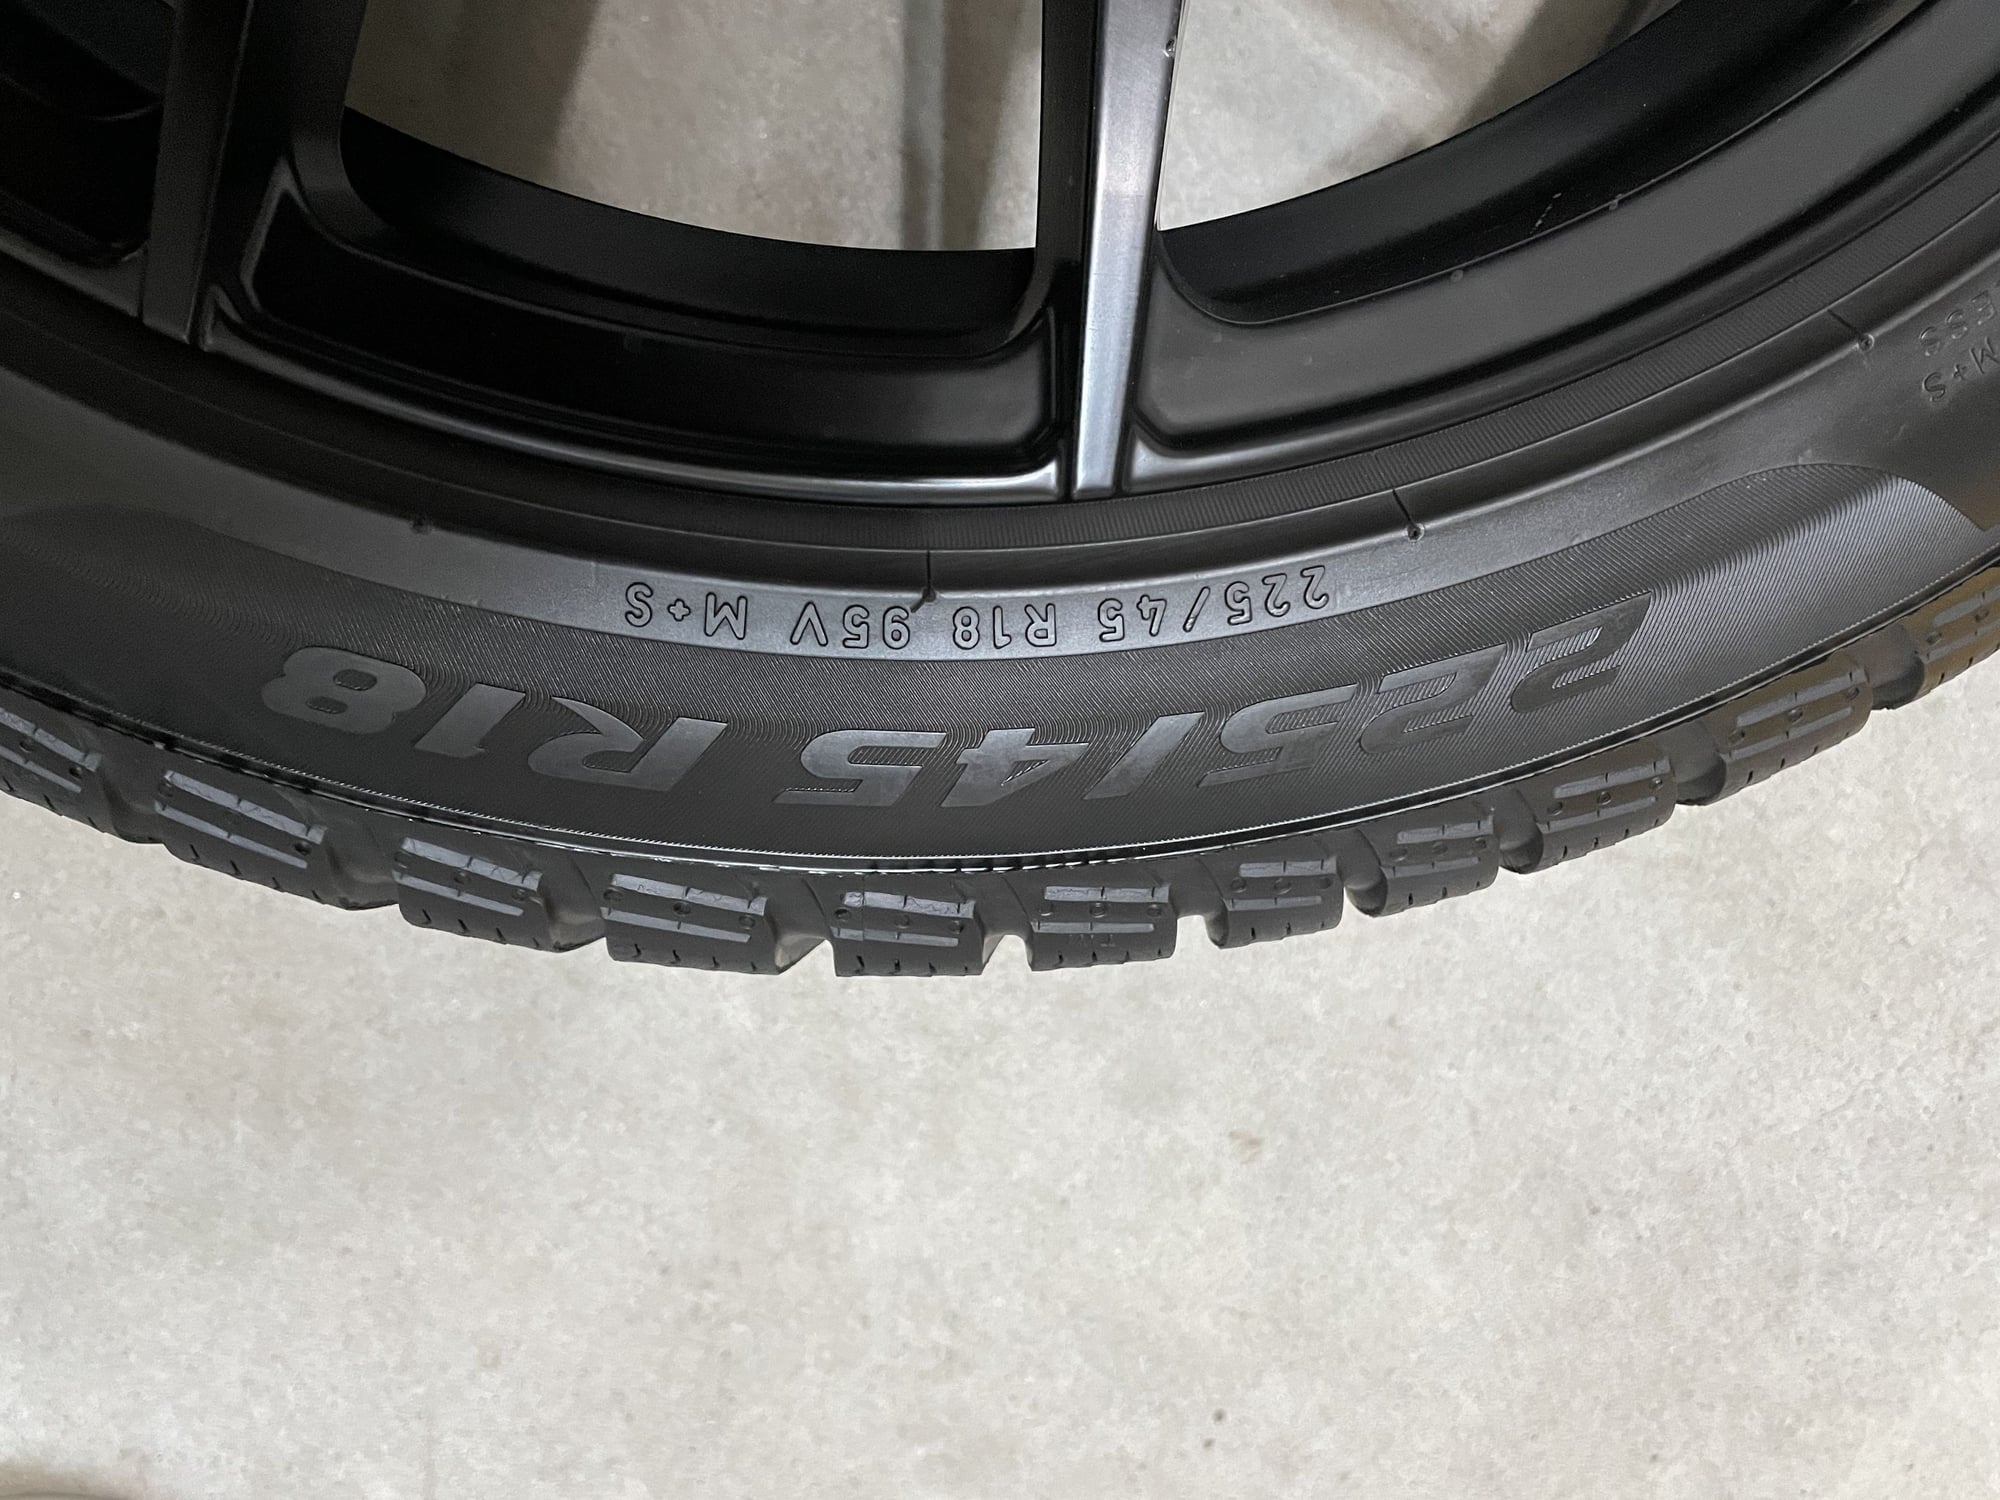 2018 Mercedes-Benz C43 AMG - 225/45/18 Pirelli Sottozero3 winter tires on rims - Wheels and Tires/Axles - $900 - Markham, ON L6B0E1, Canada